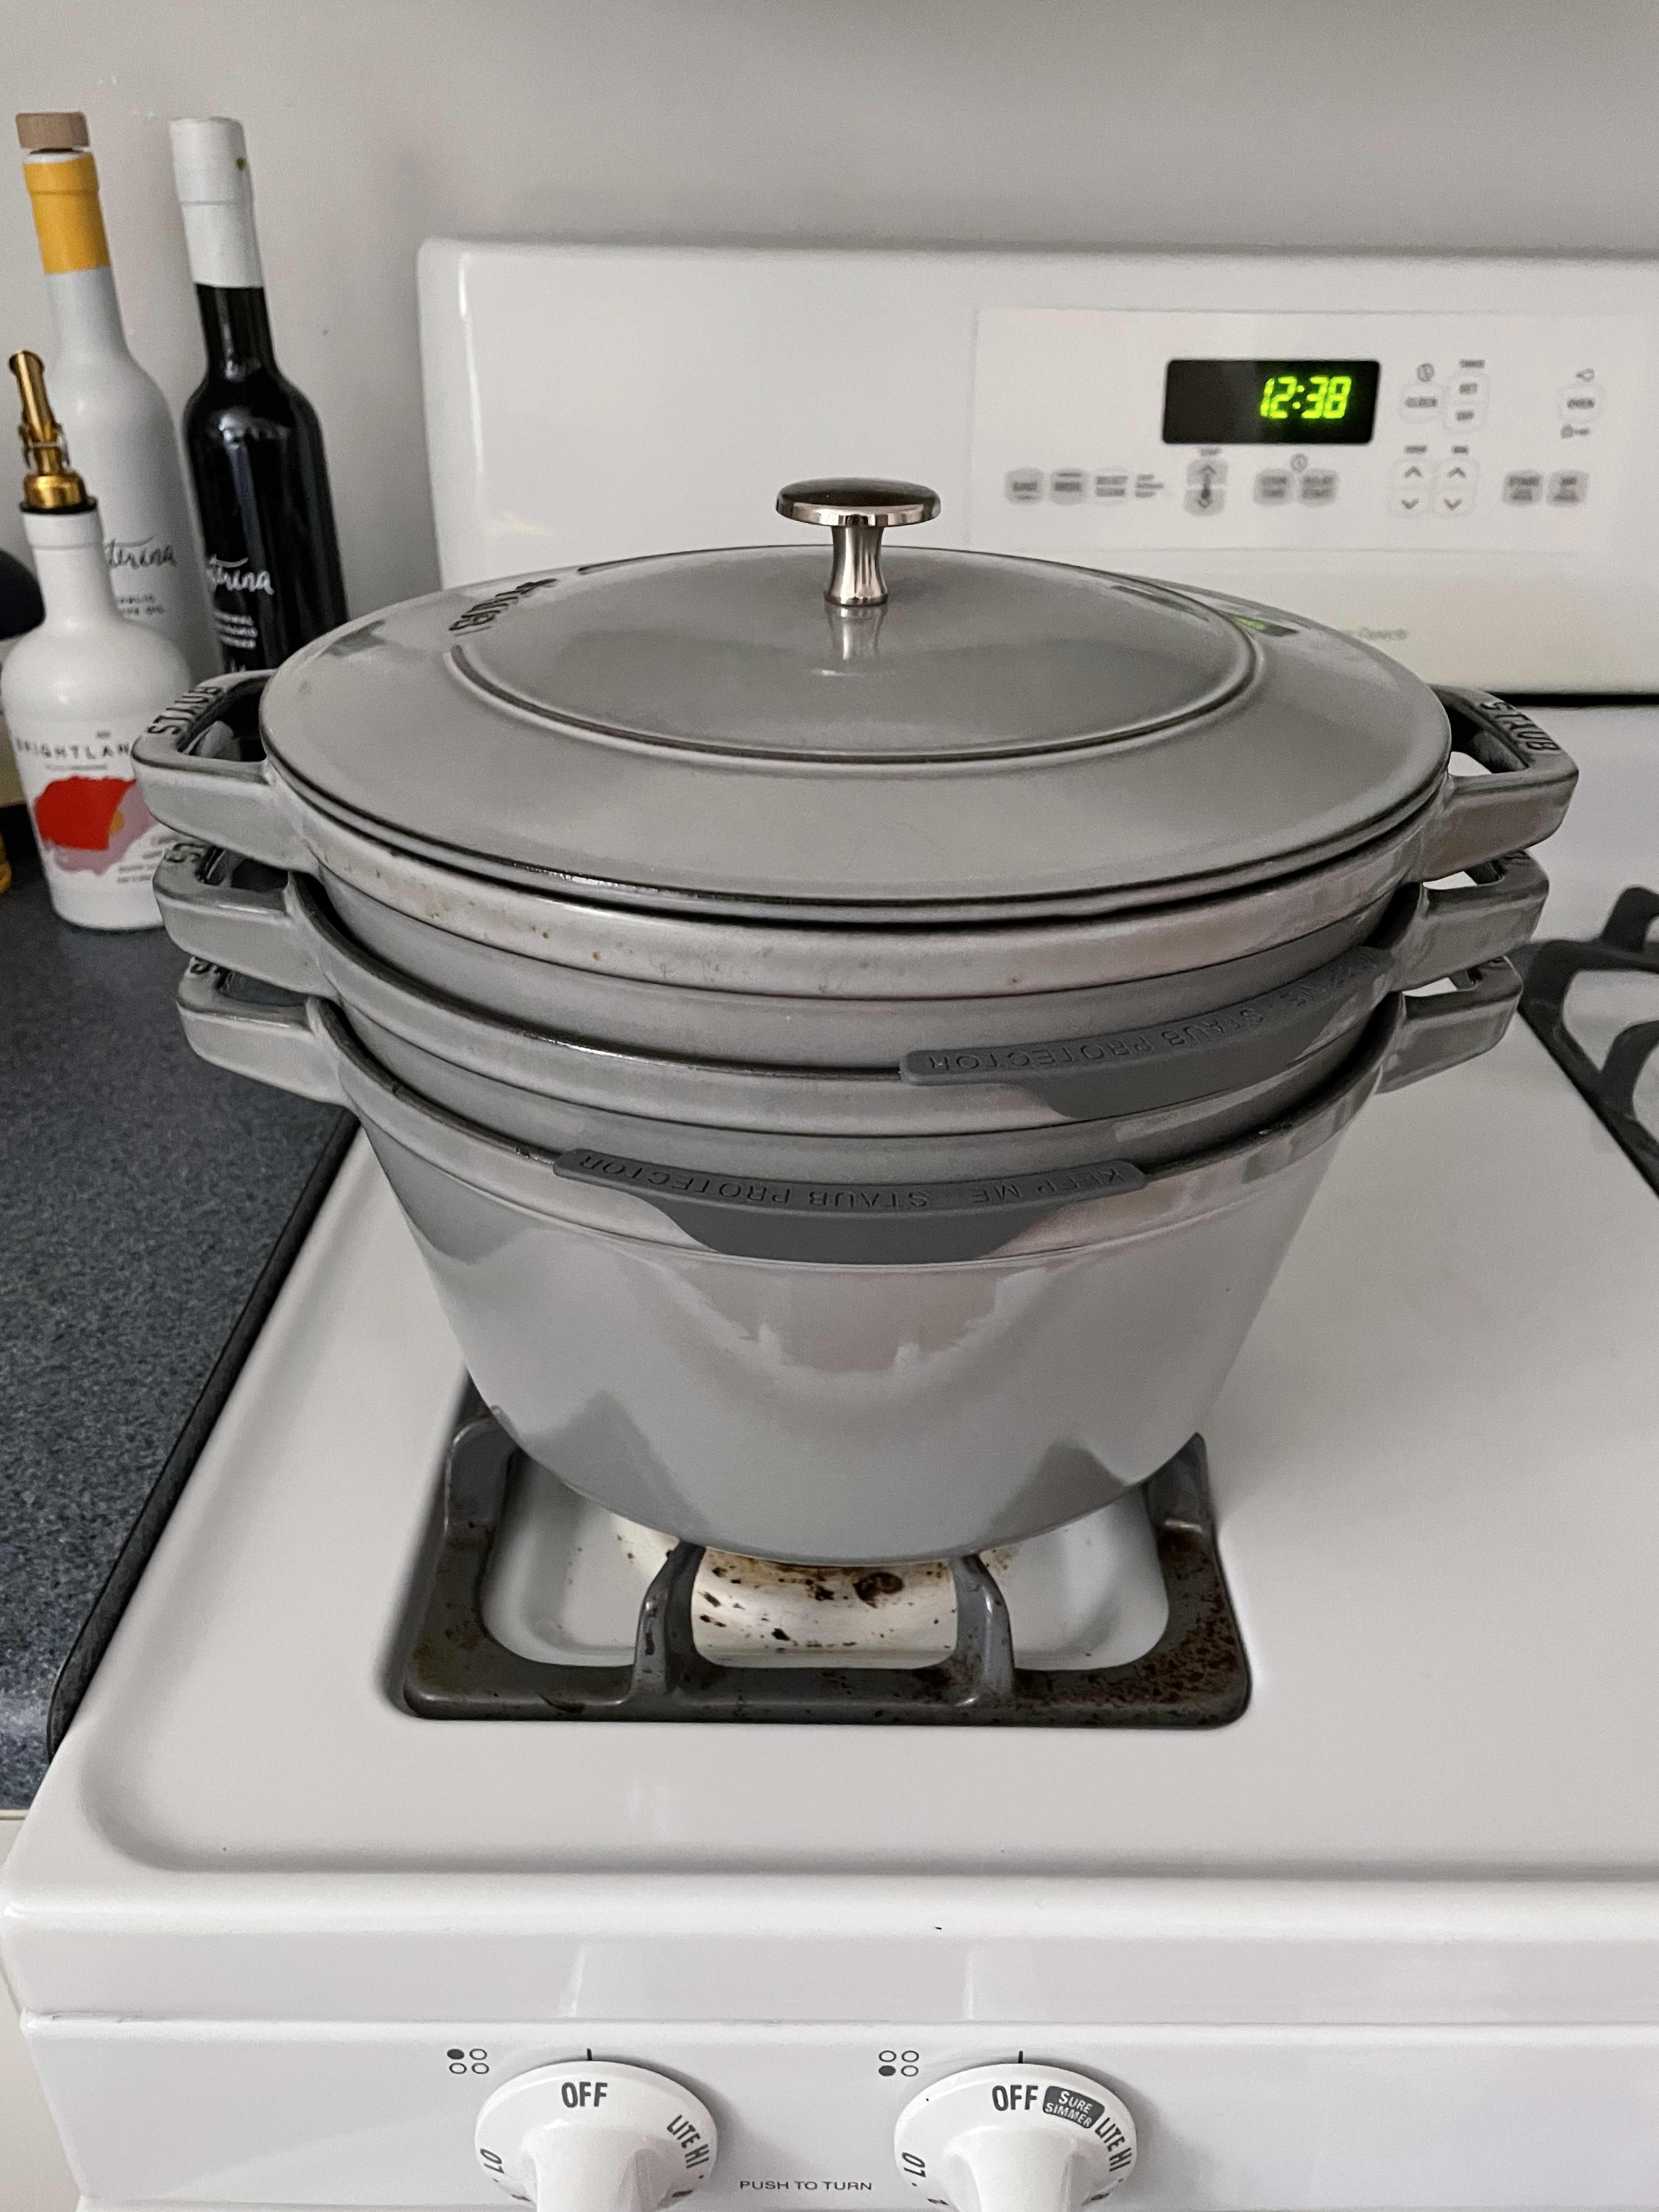 Staub Matte Black 4-Piece Stackable Cookware Set + Reviews